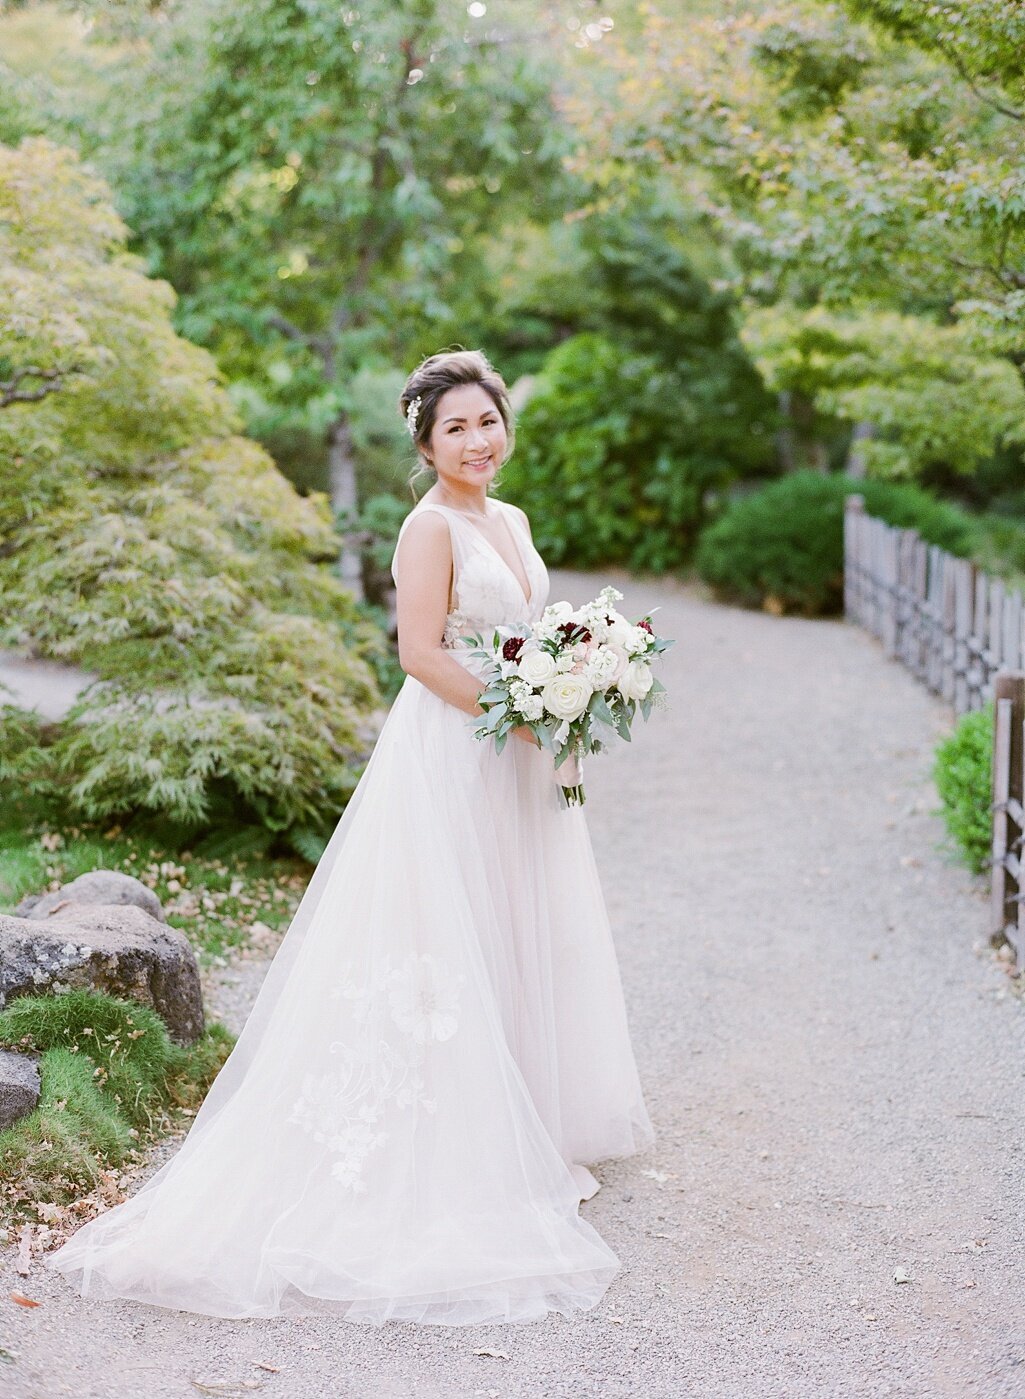 Jessie-Barksdale-Photography_Hakone-Gardens-Saratoga_San-Francisco-Bay-Area-Wedding-Photographer_0086